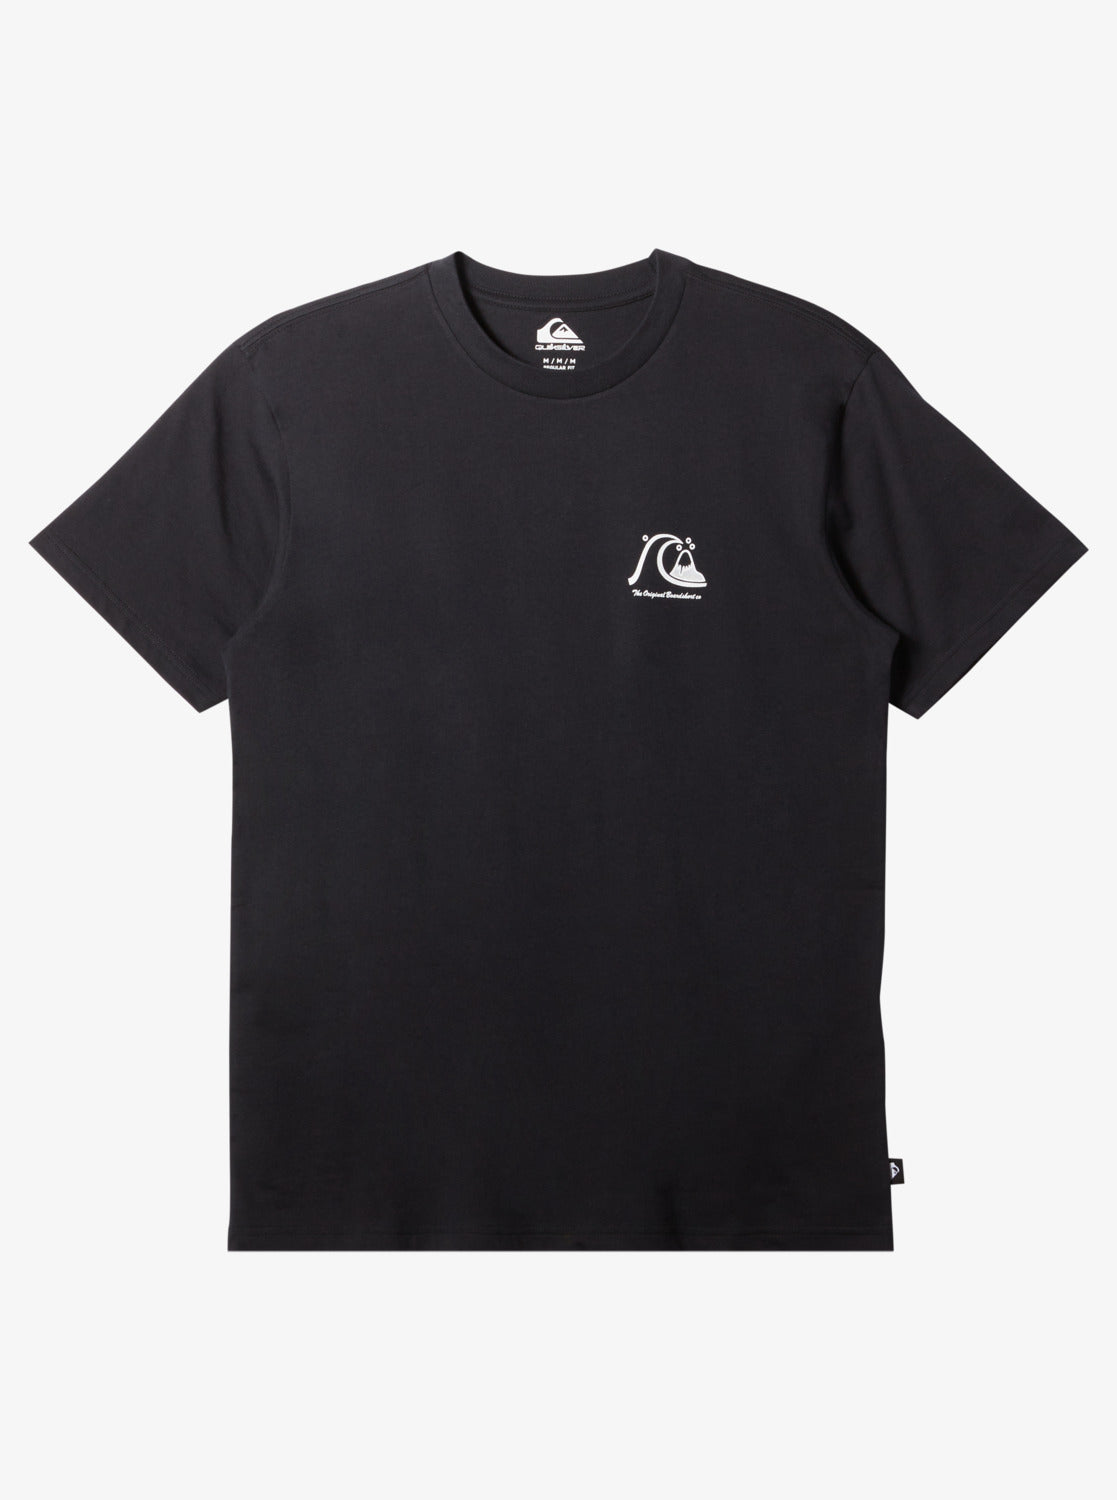 The Original Boardshort T-Shirt - Black